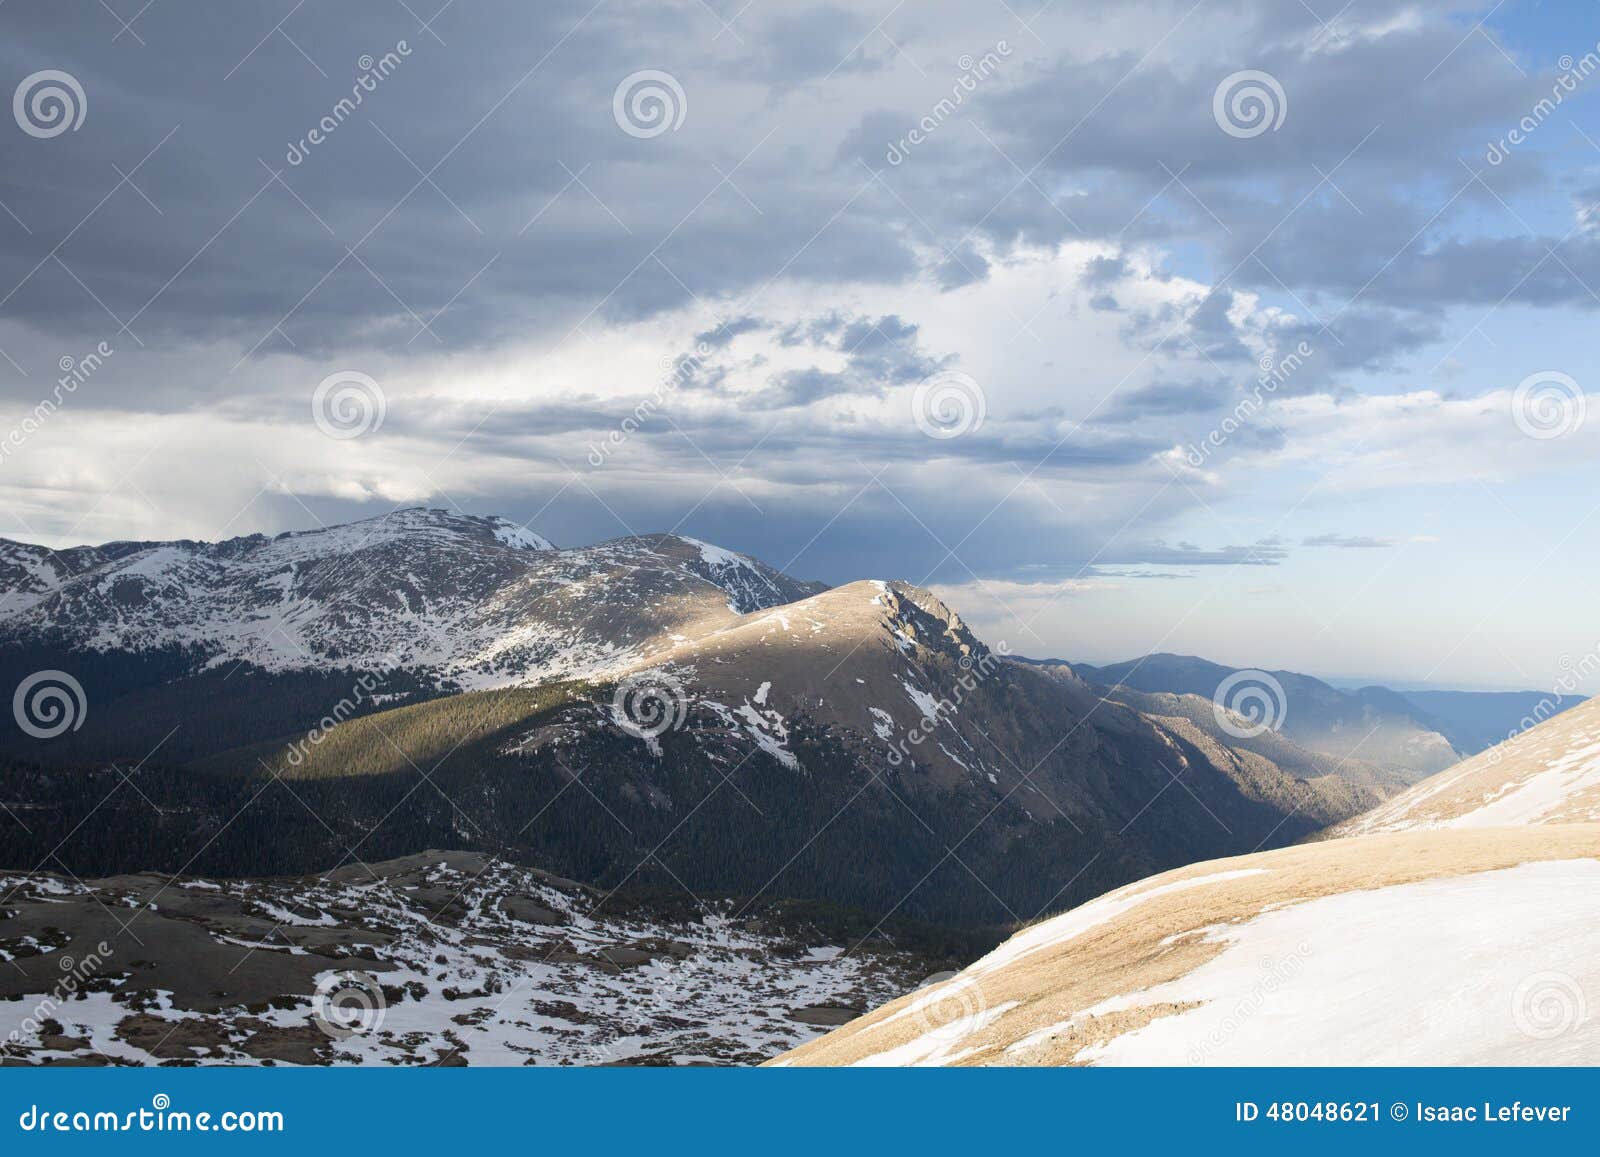 Colorado Rocky Mountains stock image. Image of rocky - 48048621